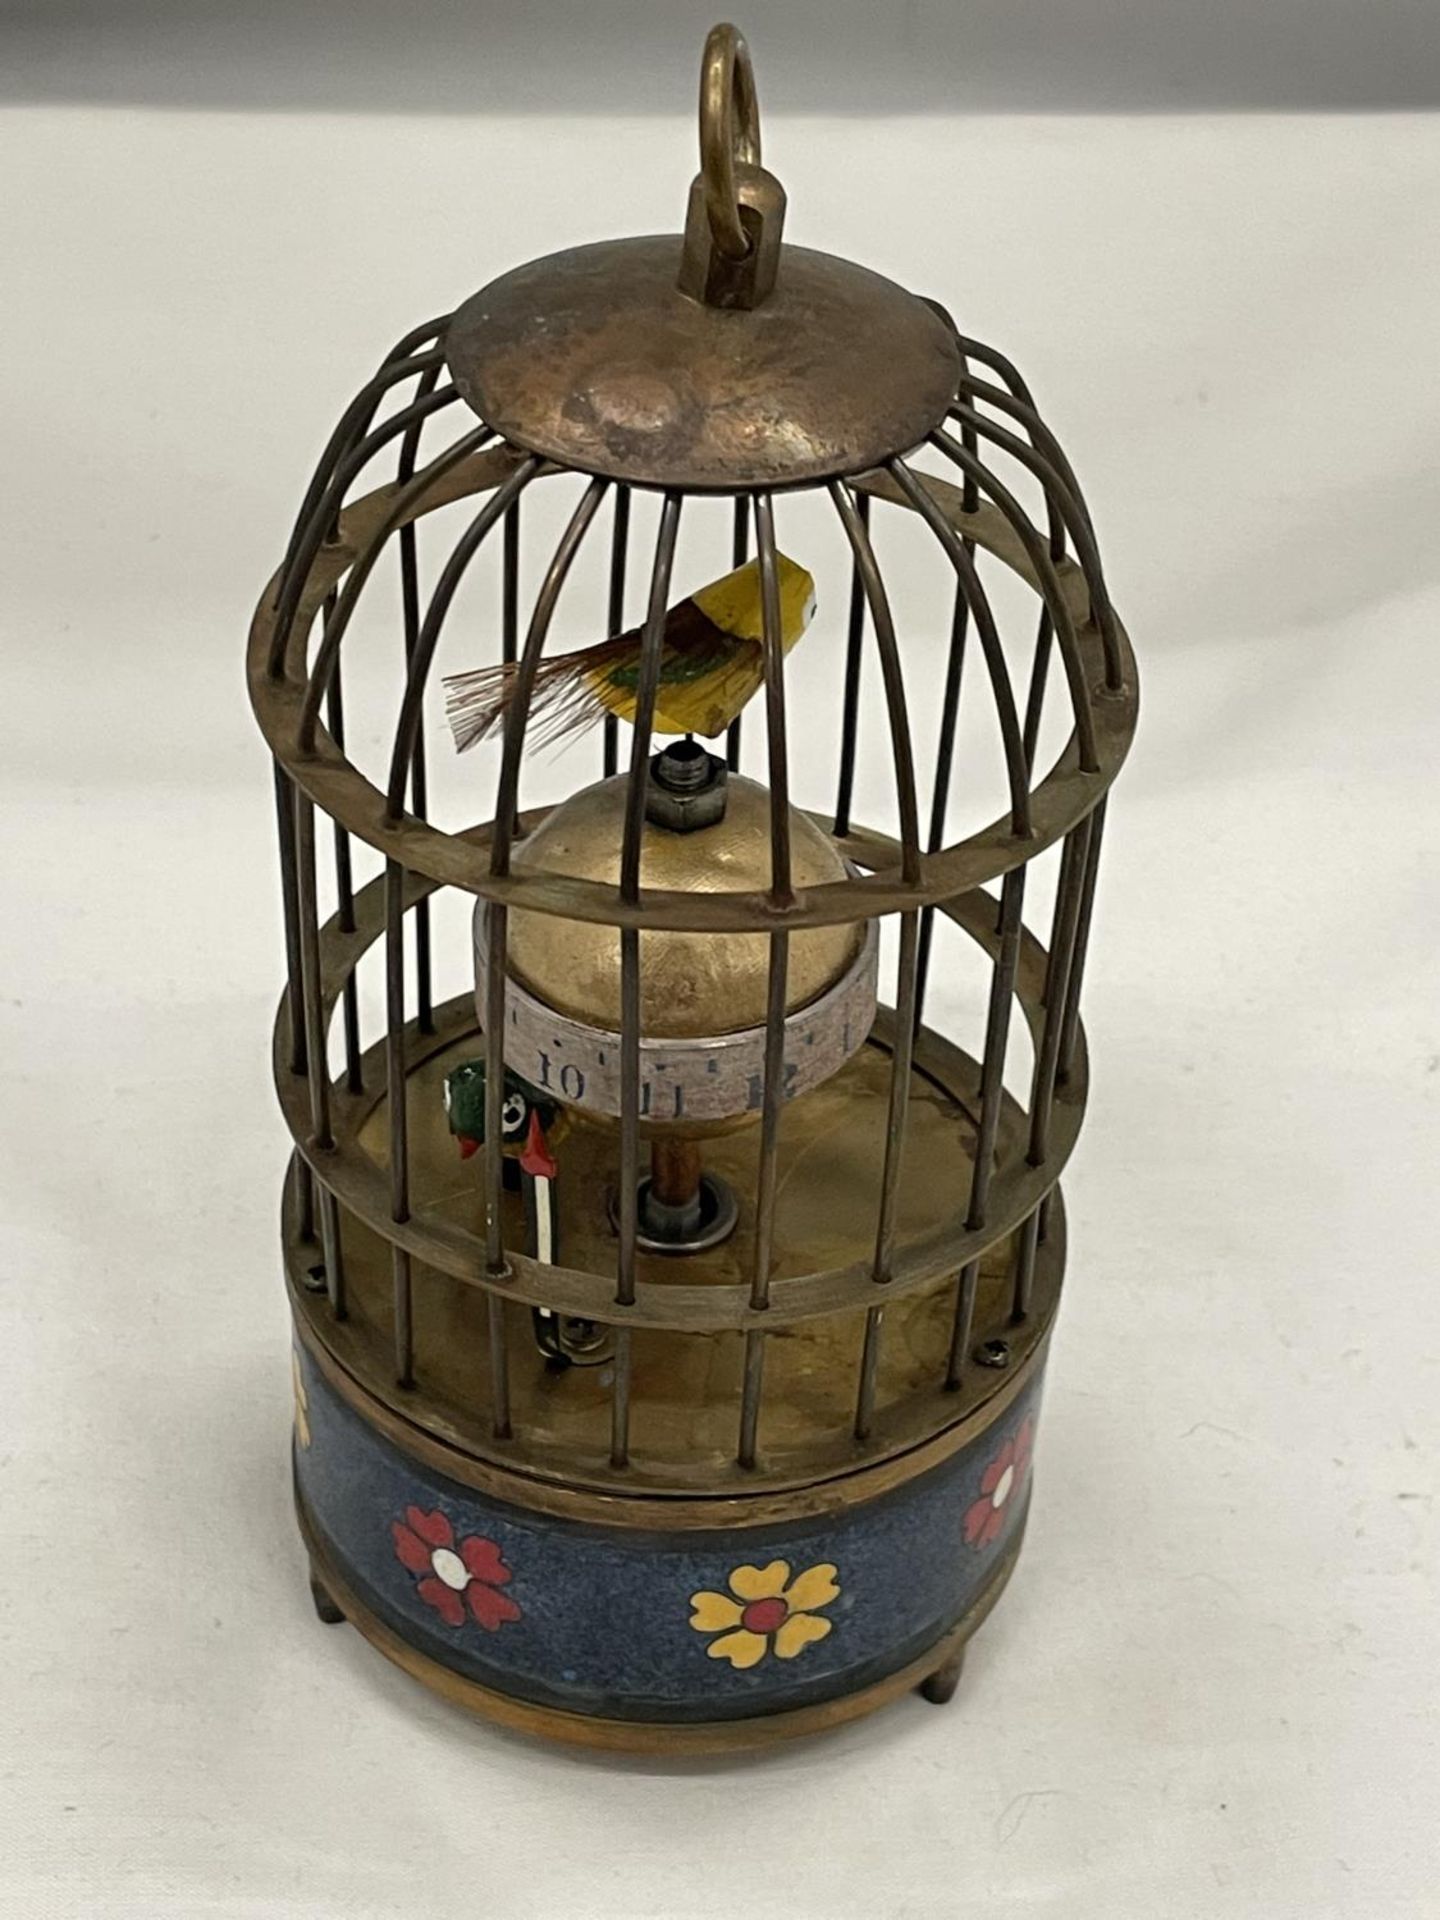 A BRASS BIRD CAGE CLOCK - Image 2 of 4